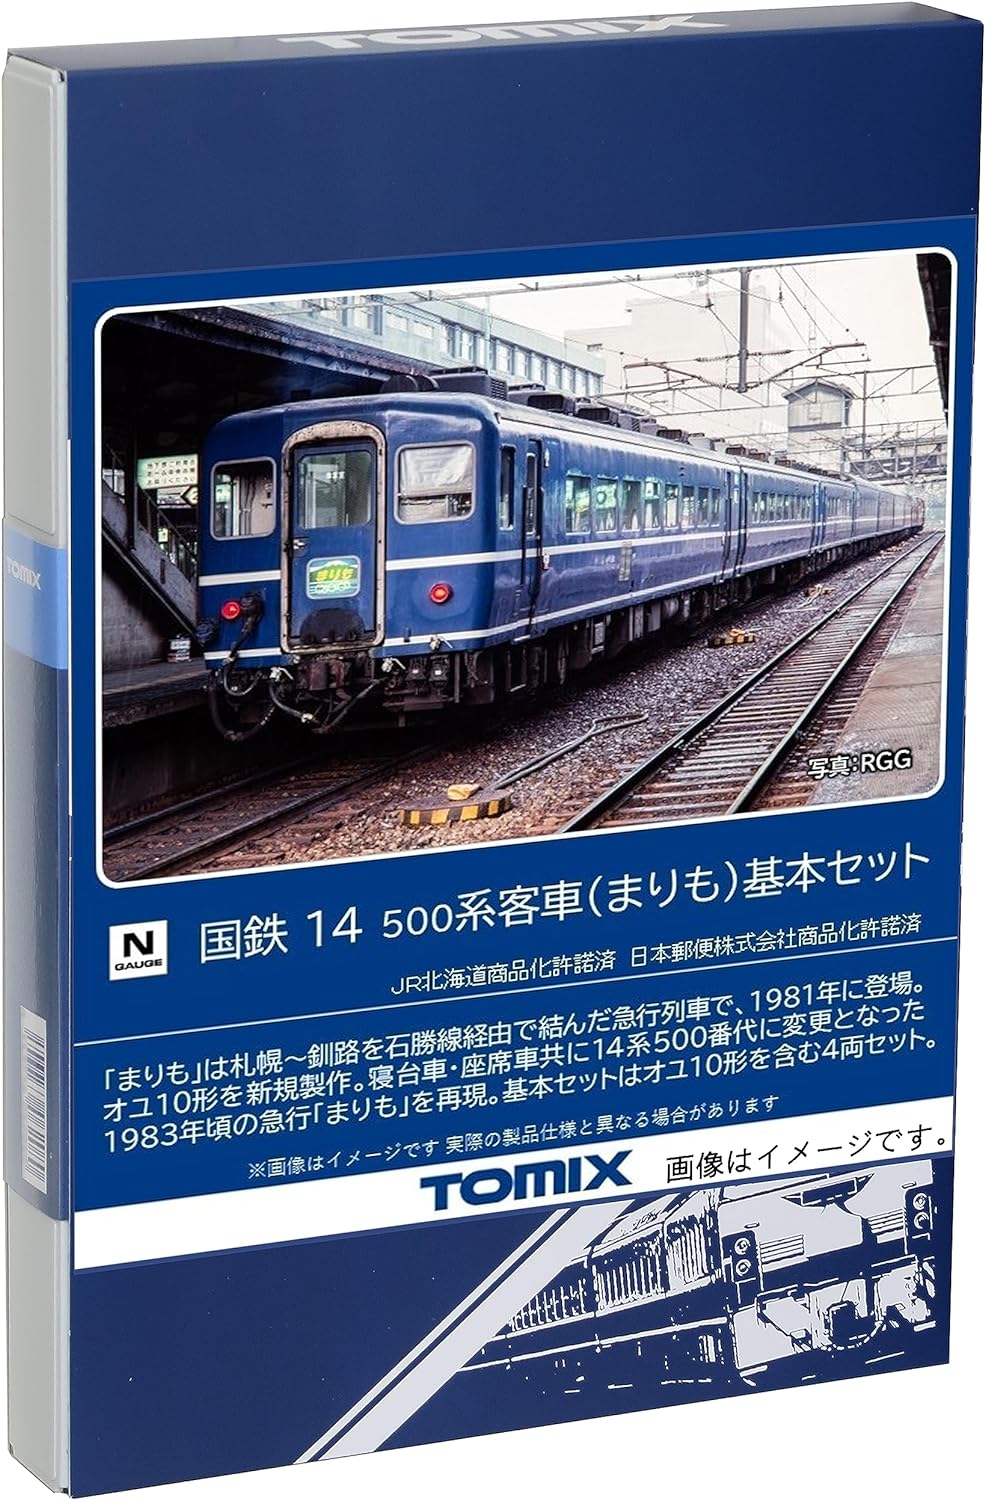 TOMIX 98543 N Gauge JNR Series 14 500 Marimo Expansion Set Railway Model Passenger Car - BanzaiHobby